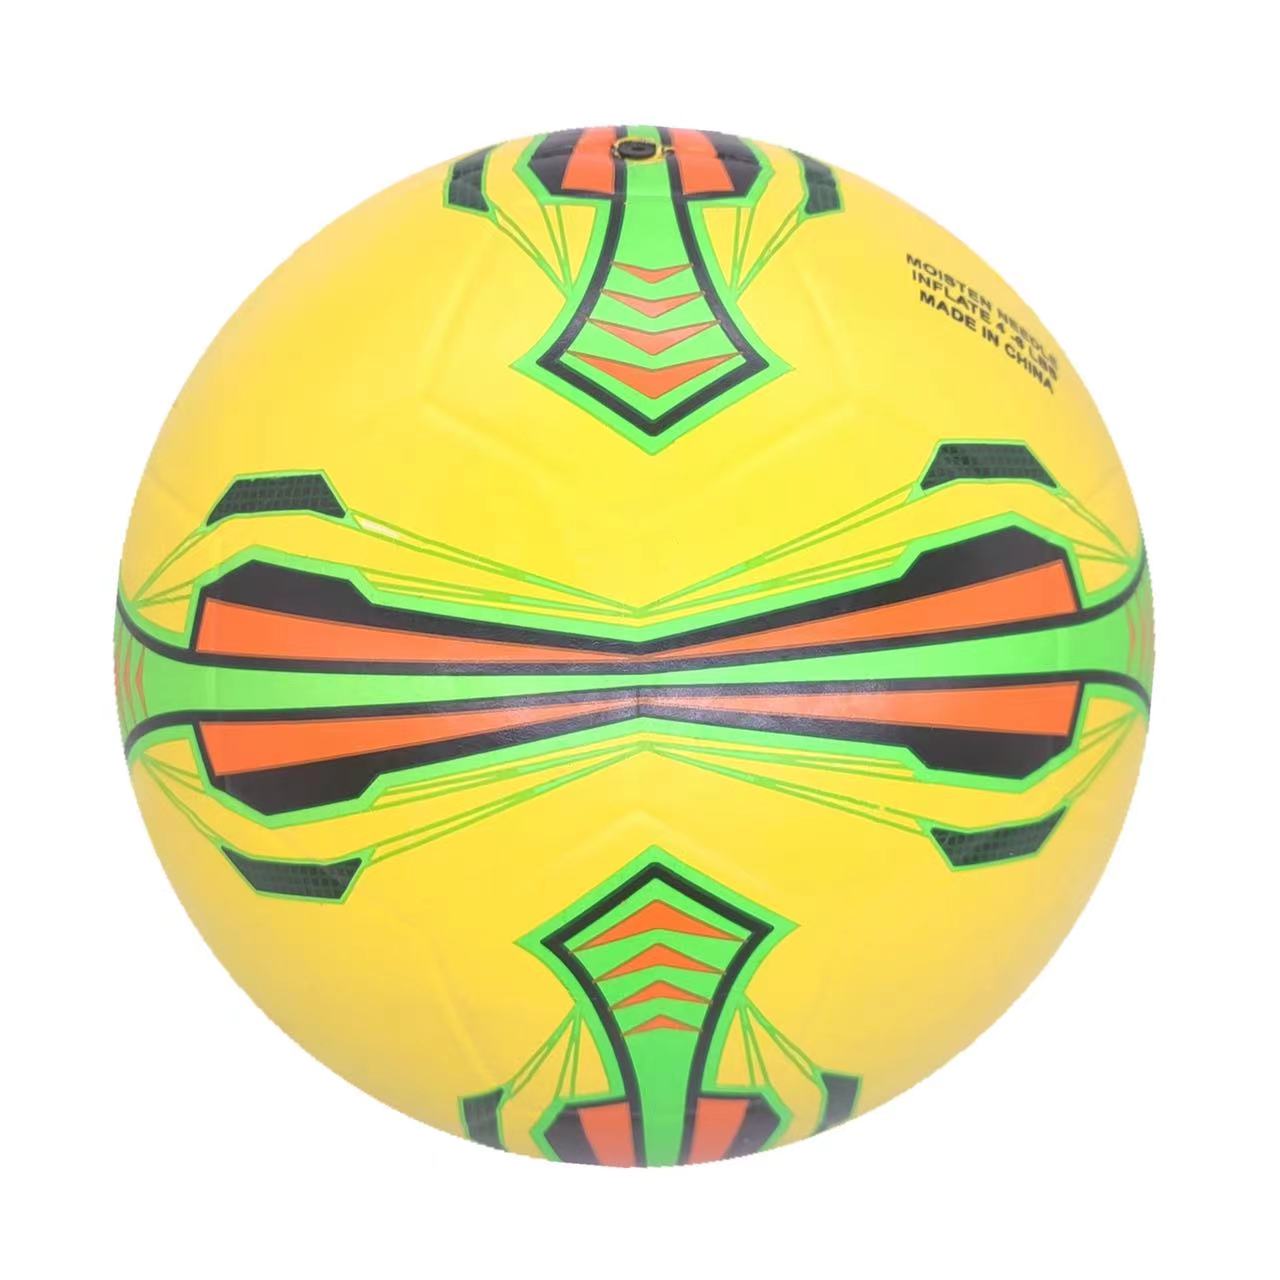 Wholesale rubber soccer ball 3322